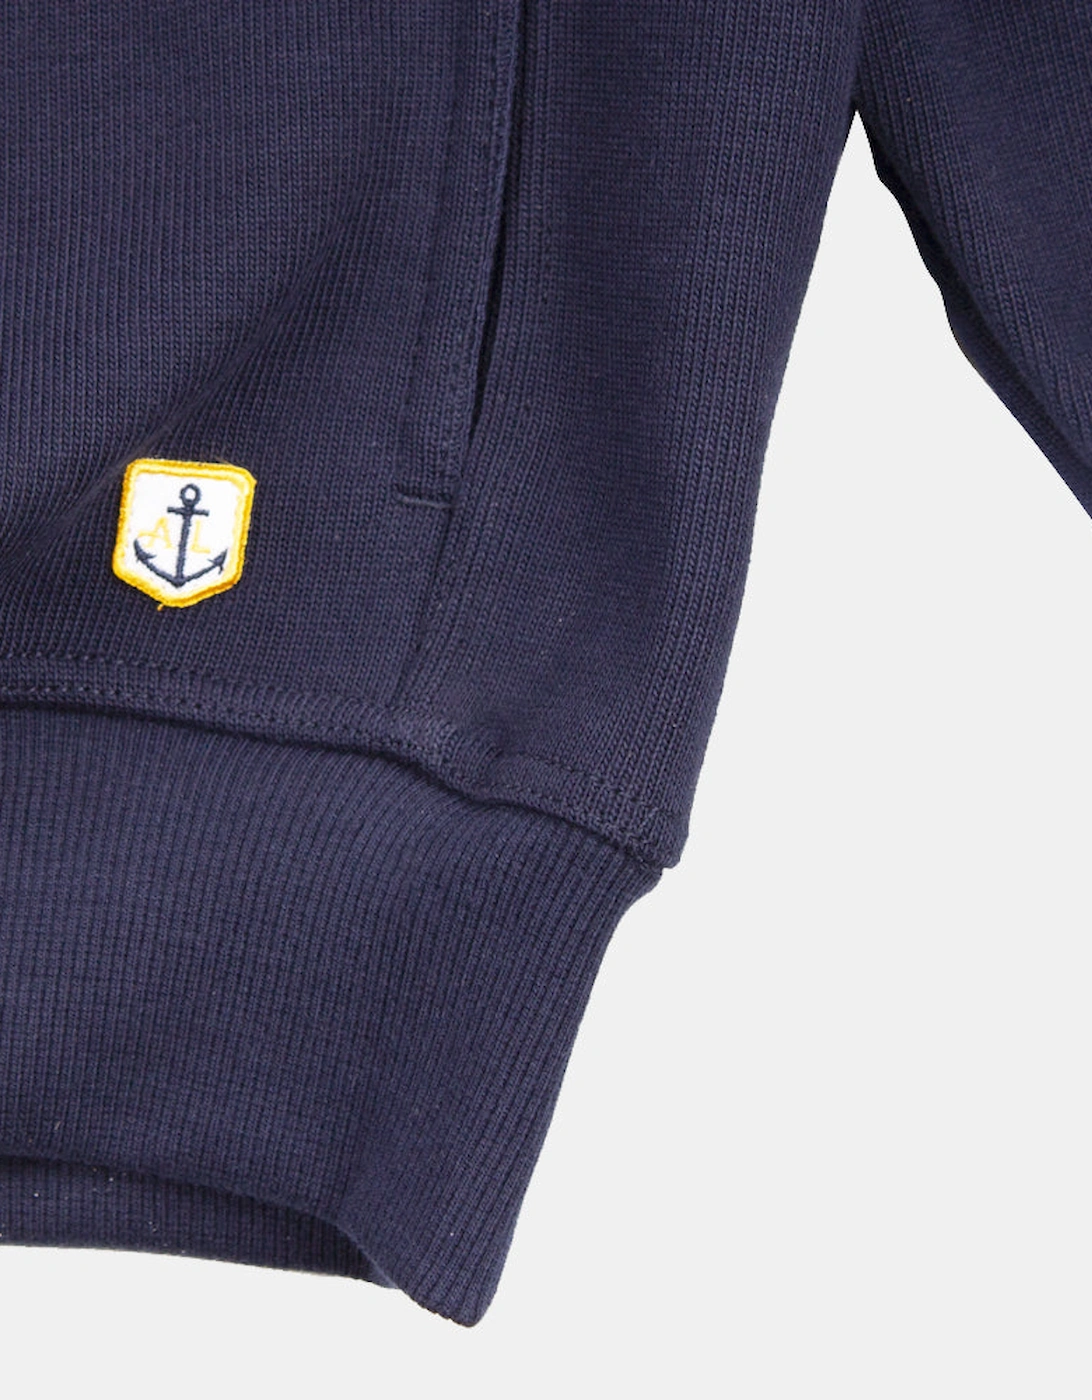 Armor-Lux Pullover Sweatshirt - Marine Deep Navy